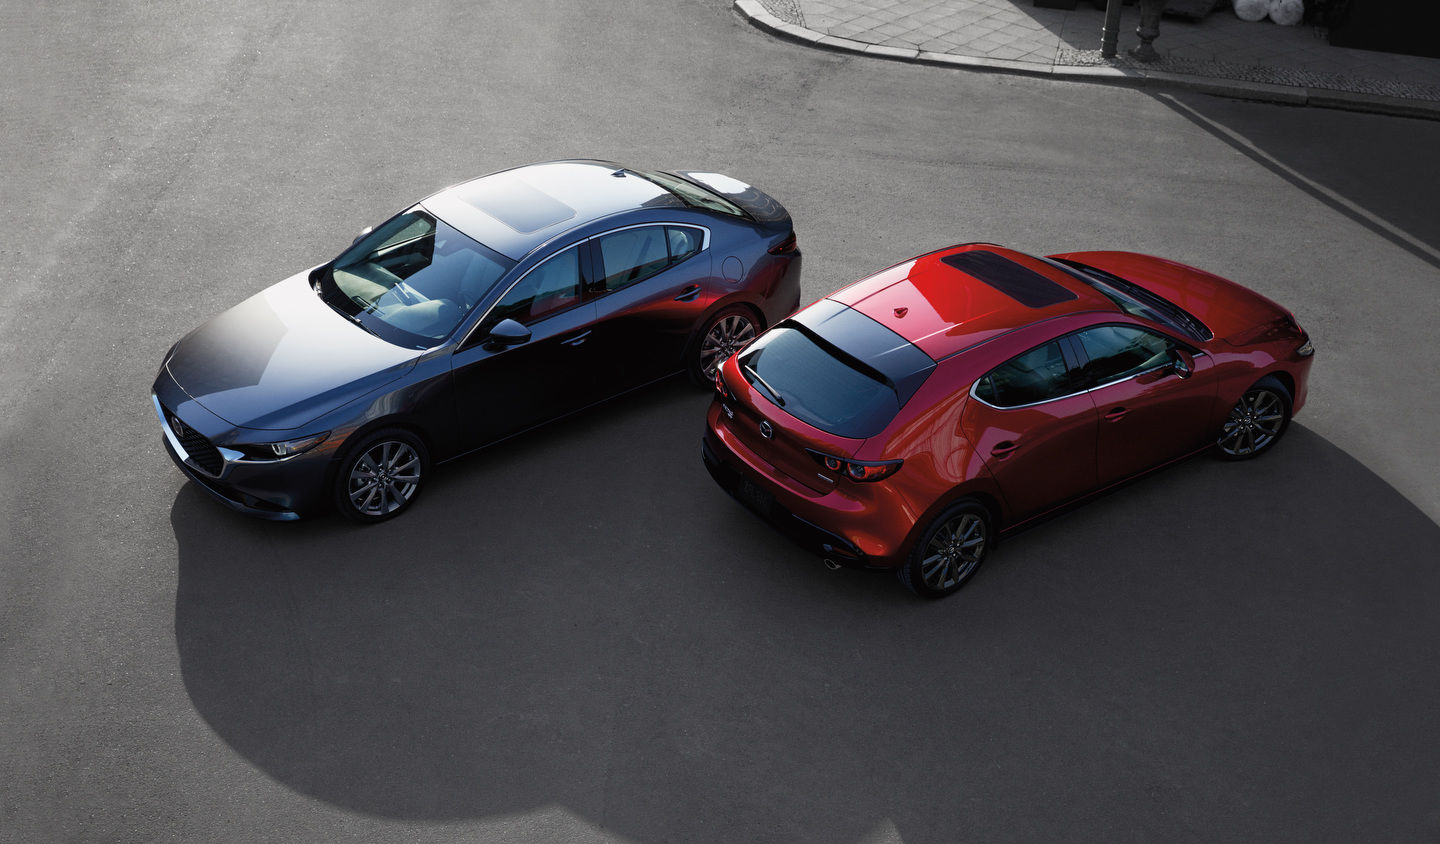 2021 Mazda3 vs. 2022 Hyundai Elantra: The Mazda3 is a Better Compact